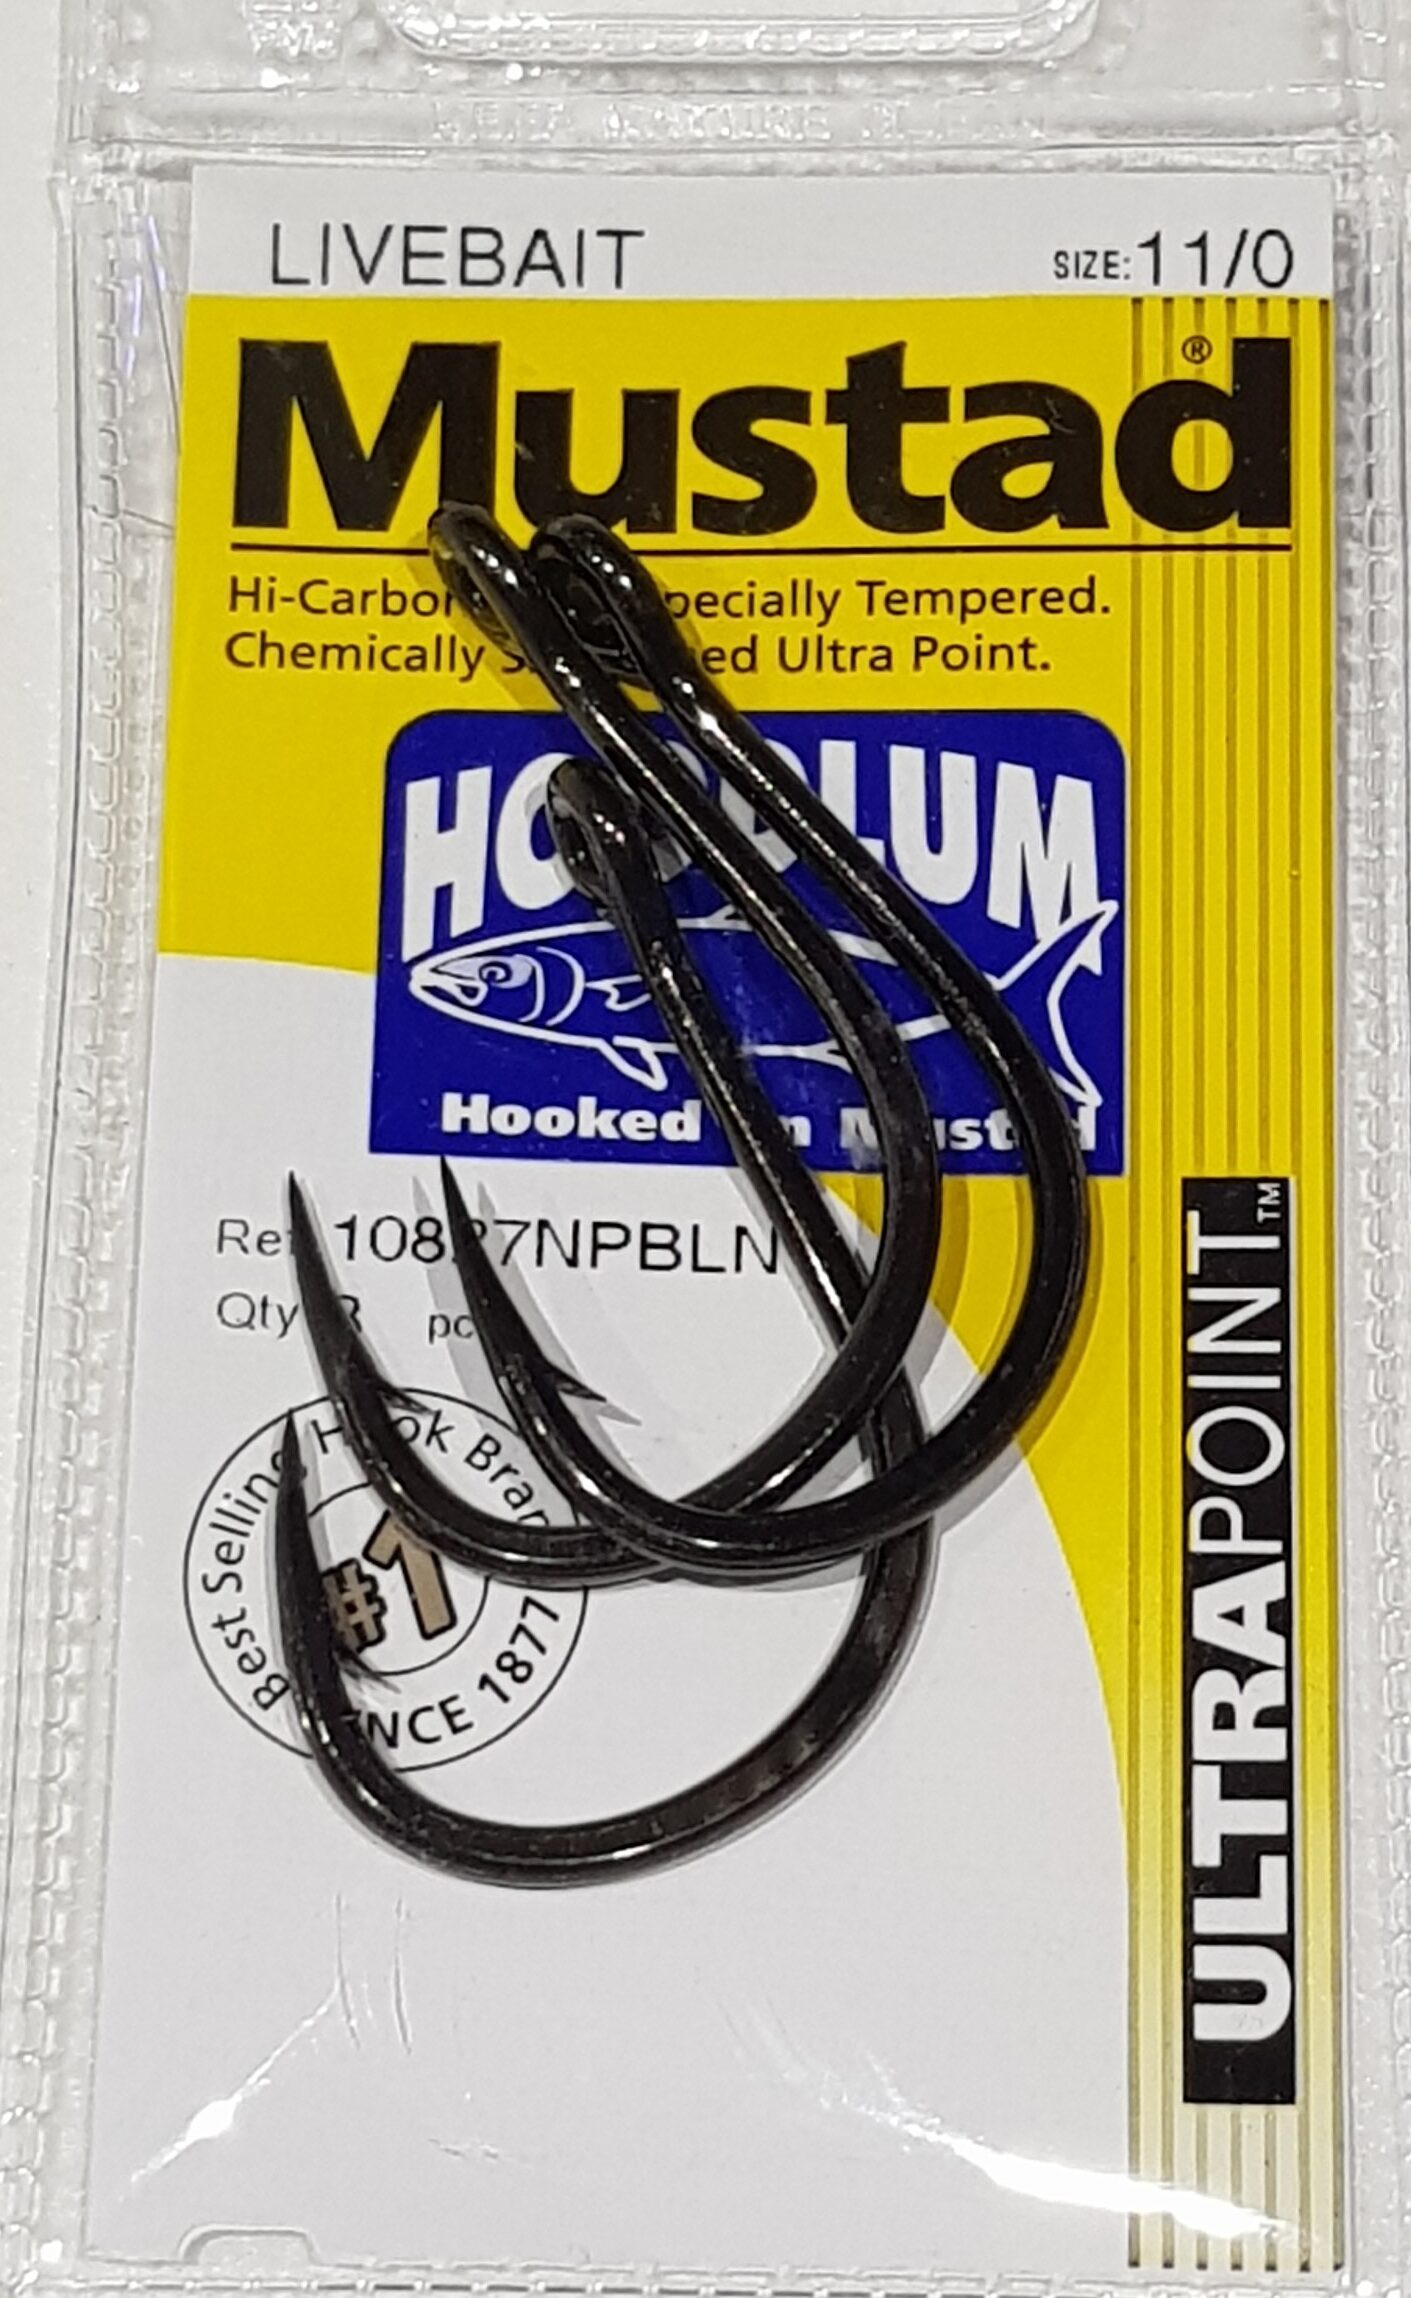 Mustad Hoodlum Live Bait Fishing Hooks 11/0 – Online Fishen Supplies